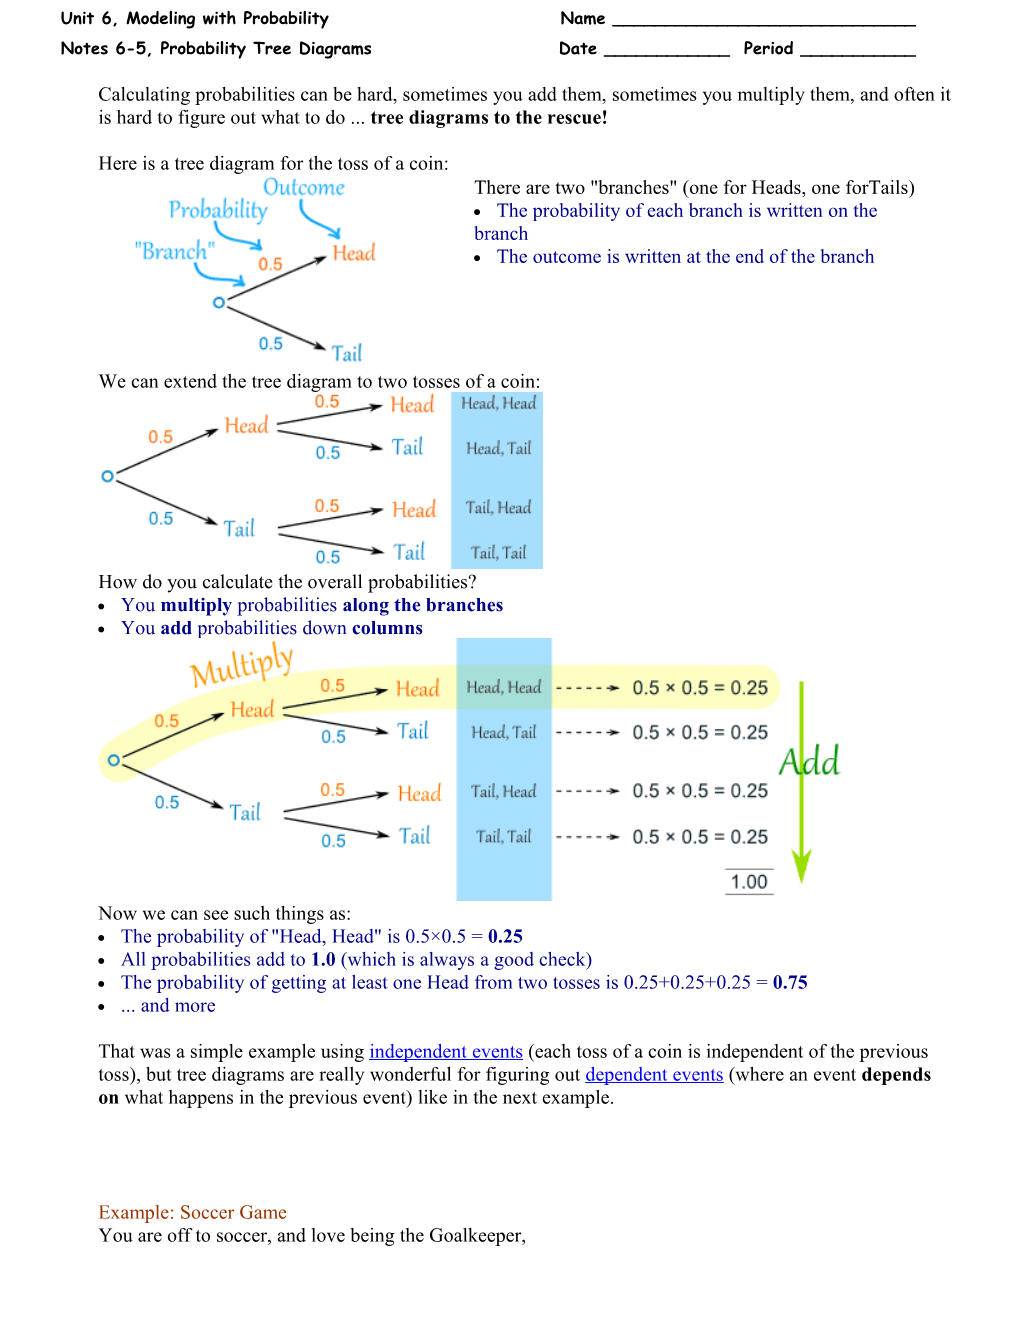 Notes 6-5 Probability Tree Diagrams